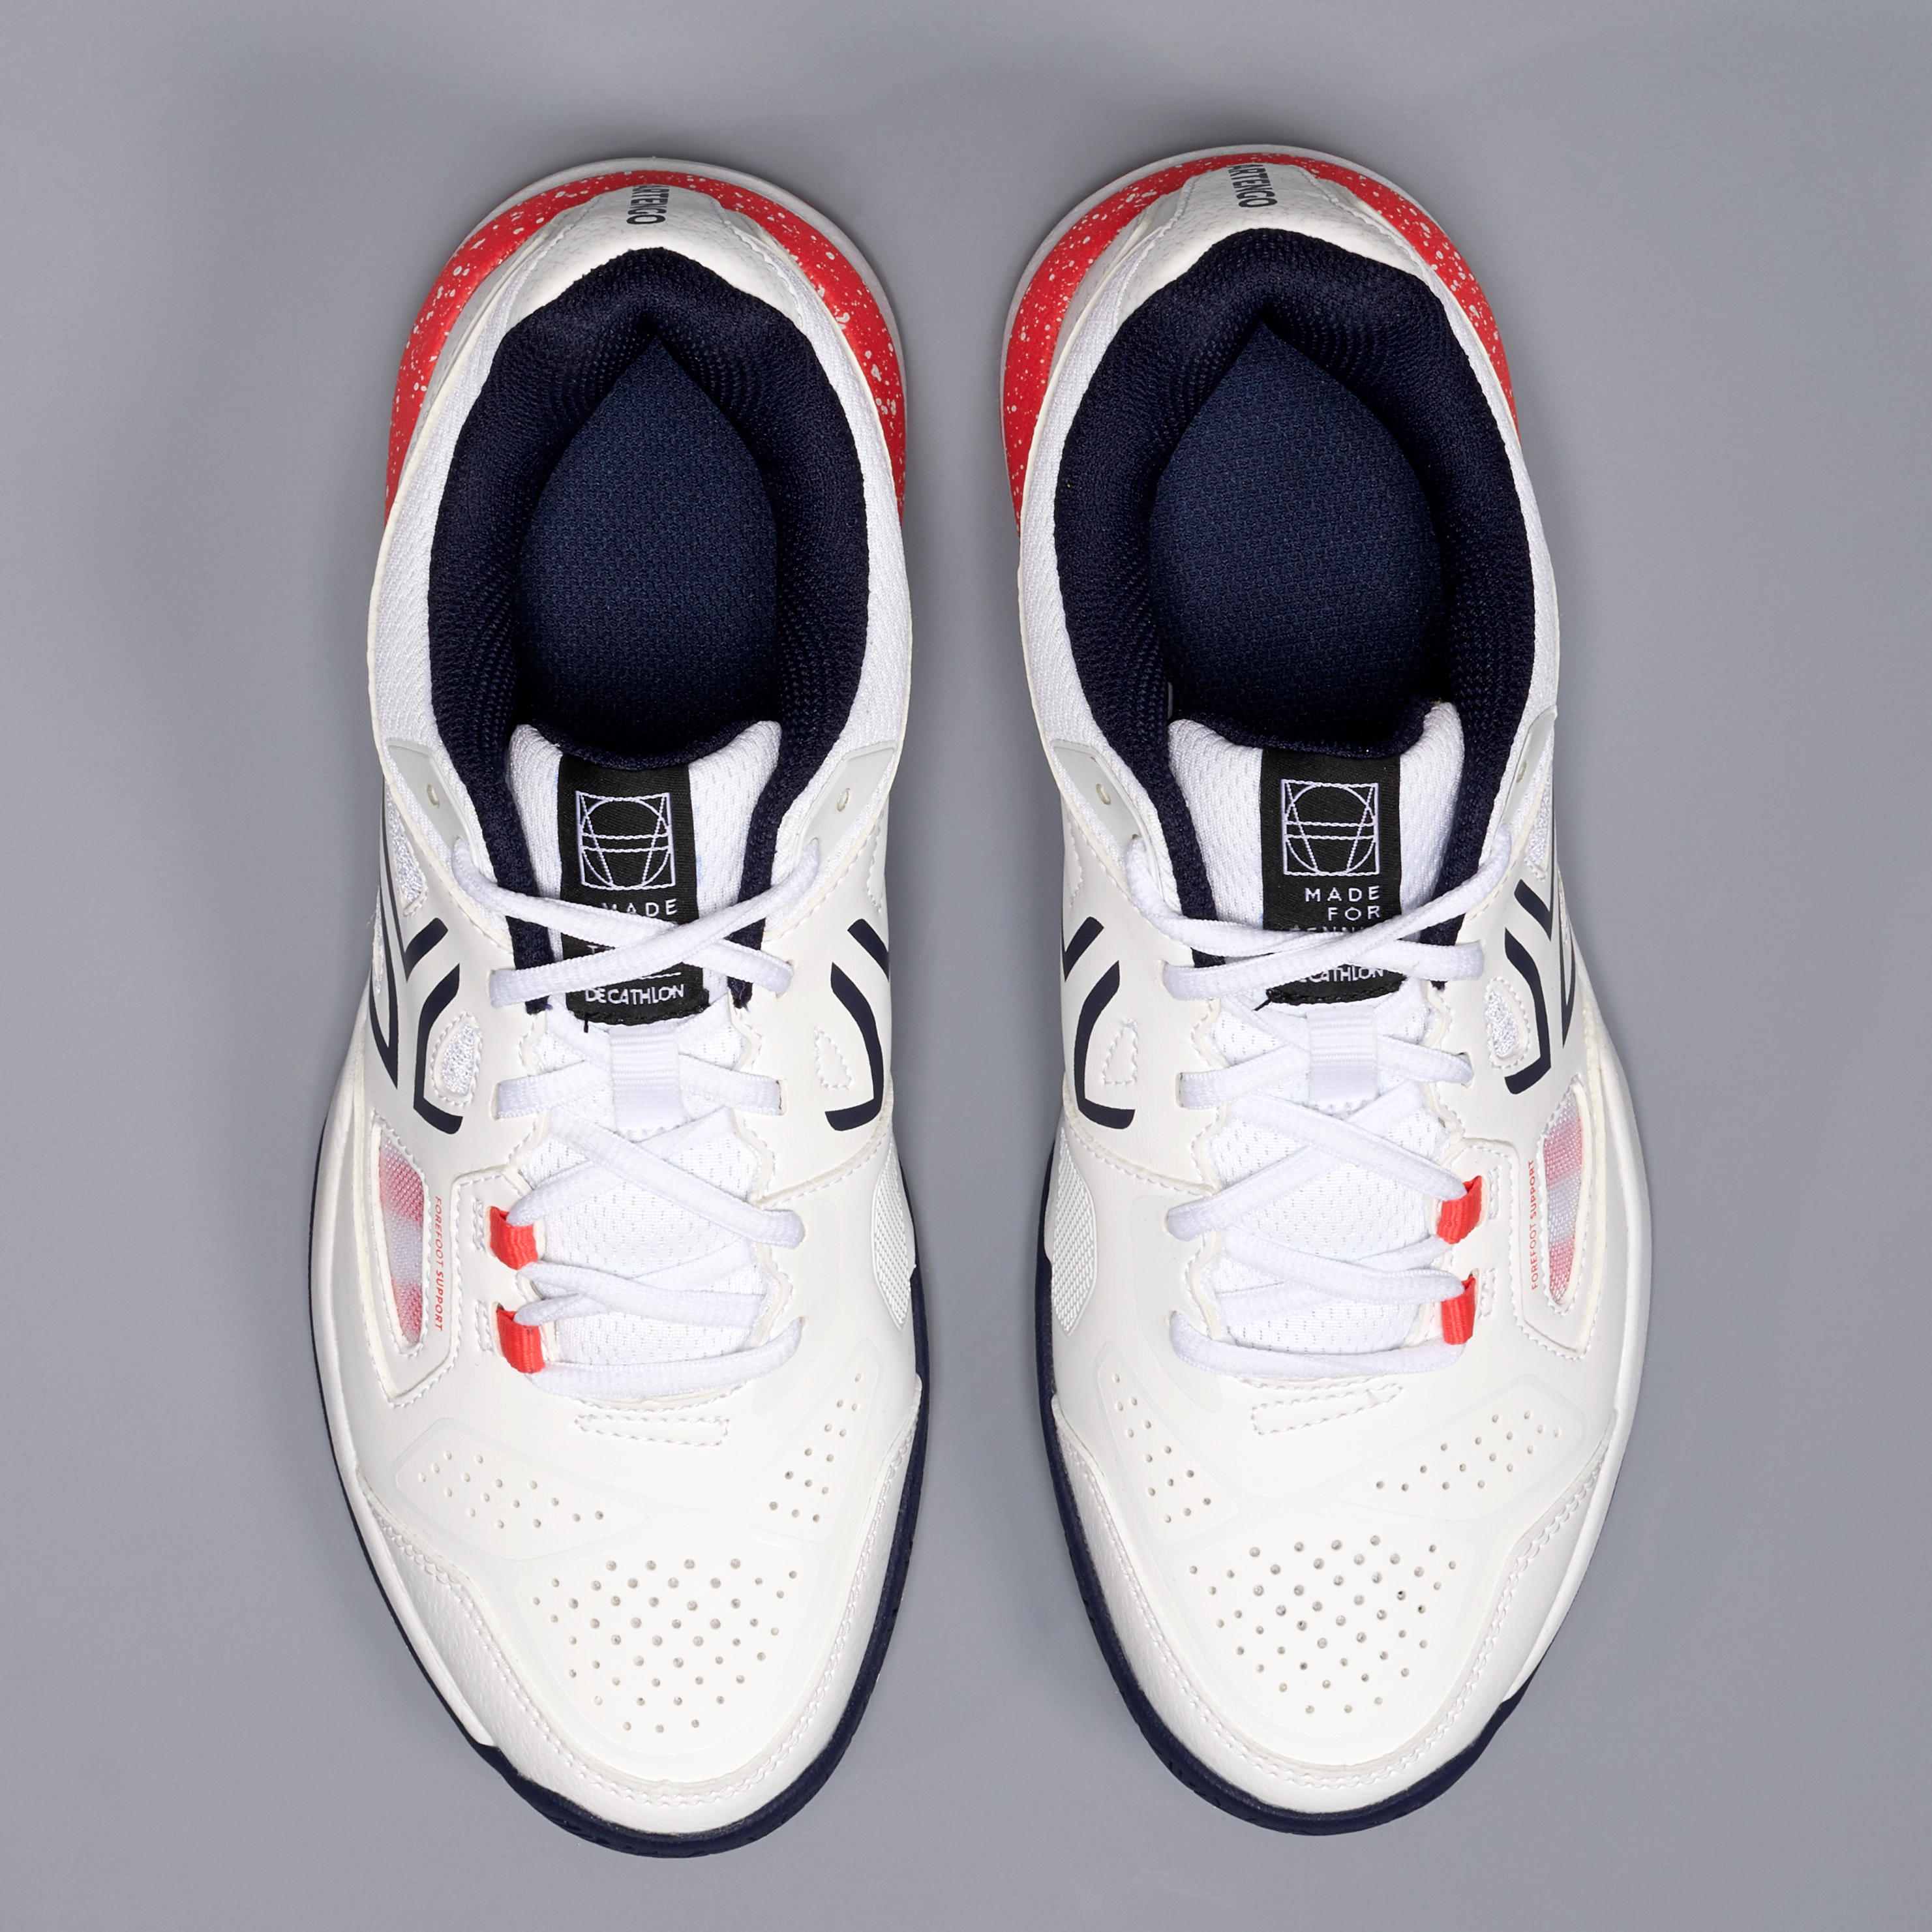 TS500 Women's Tennis Shoe - White - ARTENGO